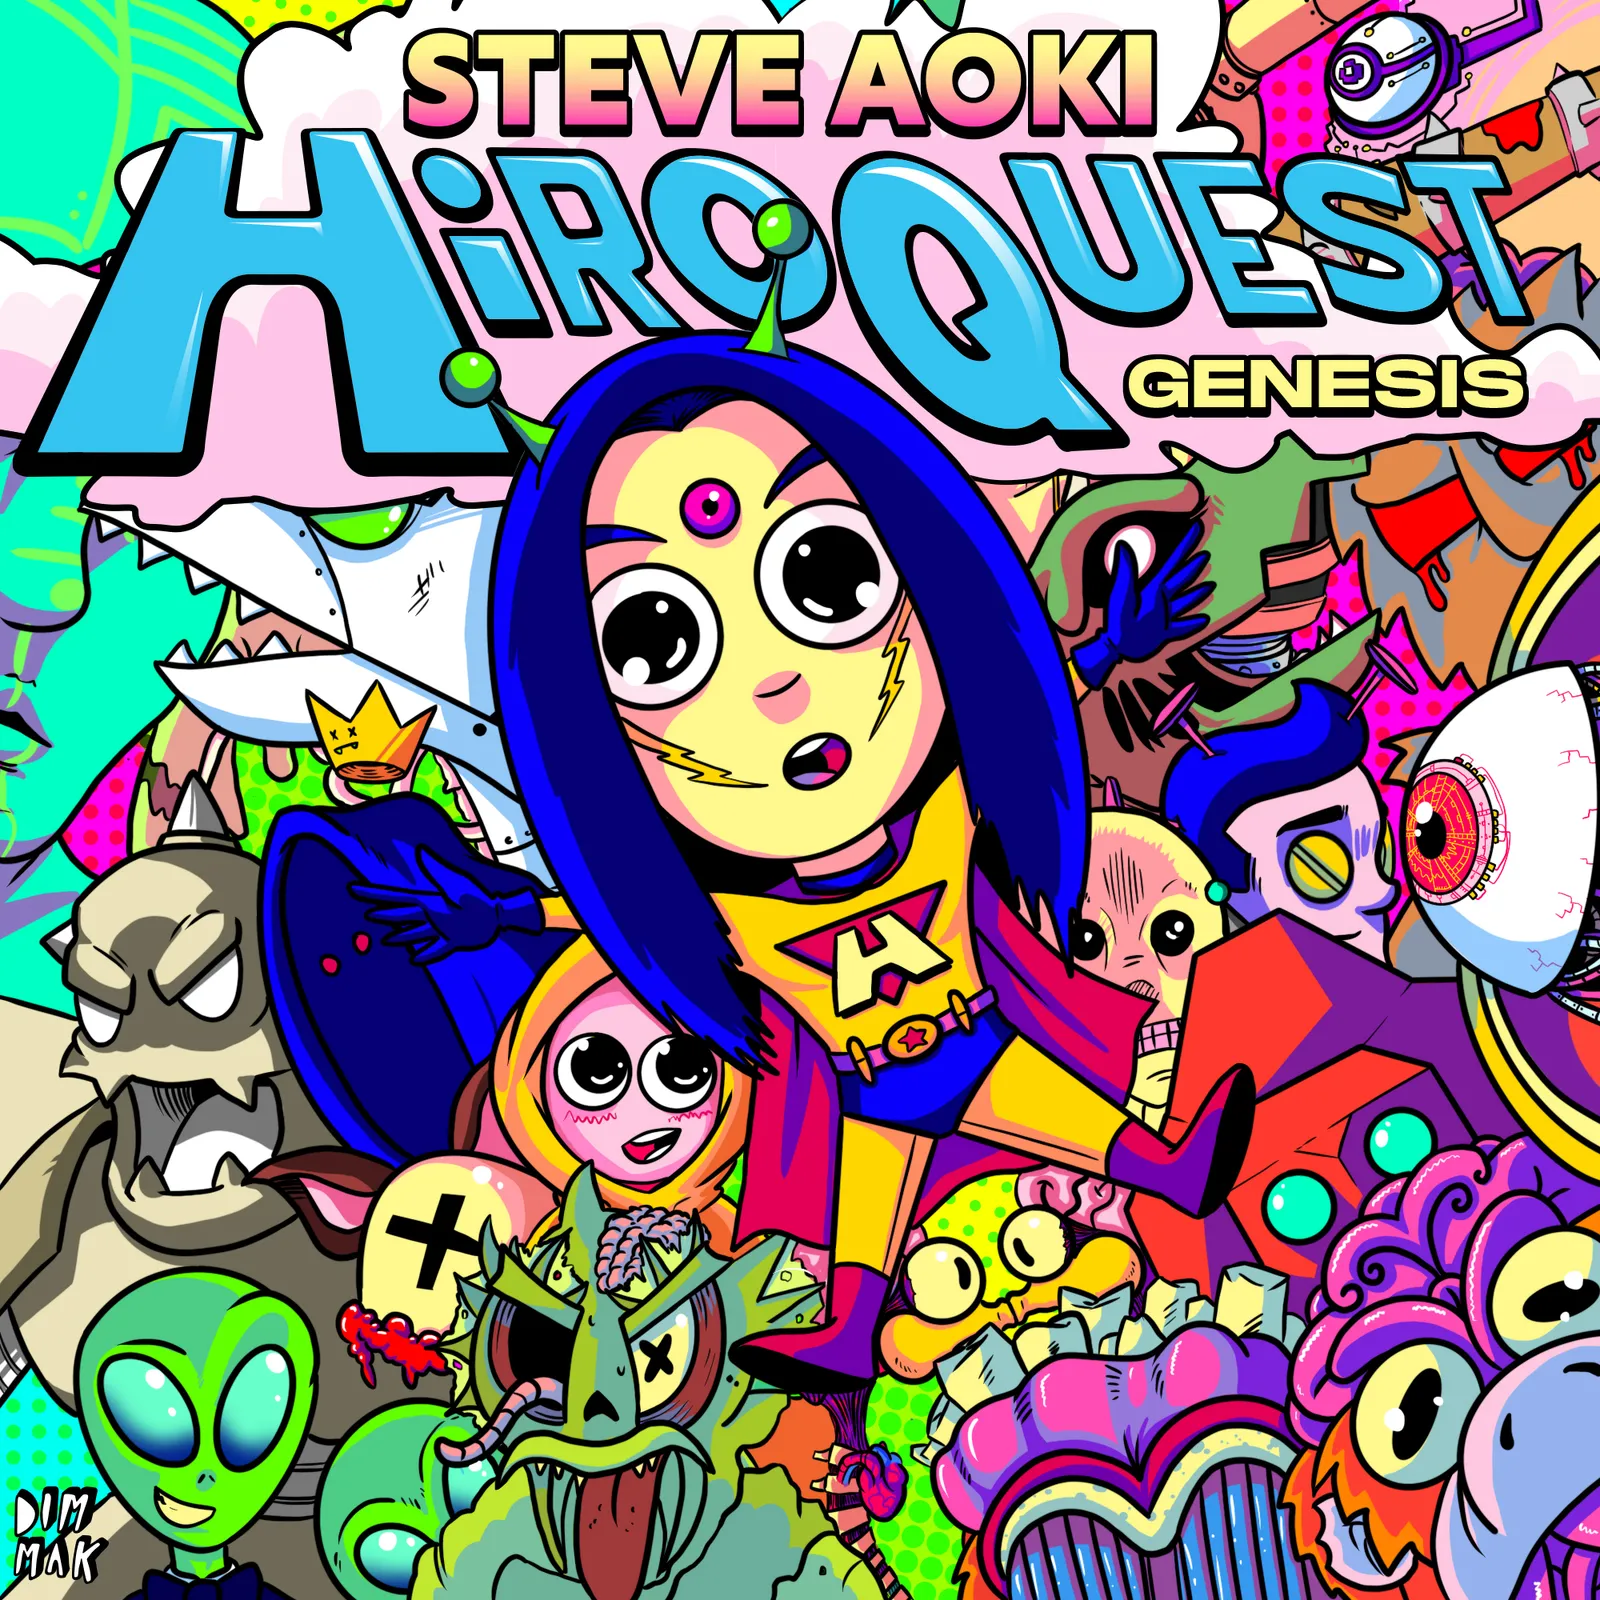 Absen Hampir 2 Tahun, Steve Aoki Rilis Album 'HiROQUEST' 